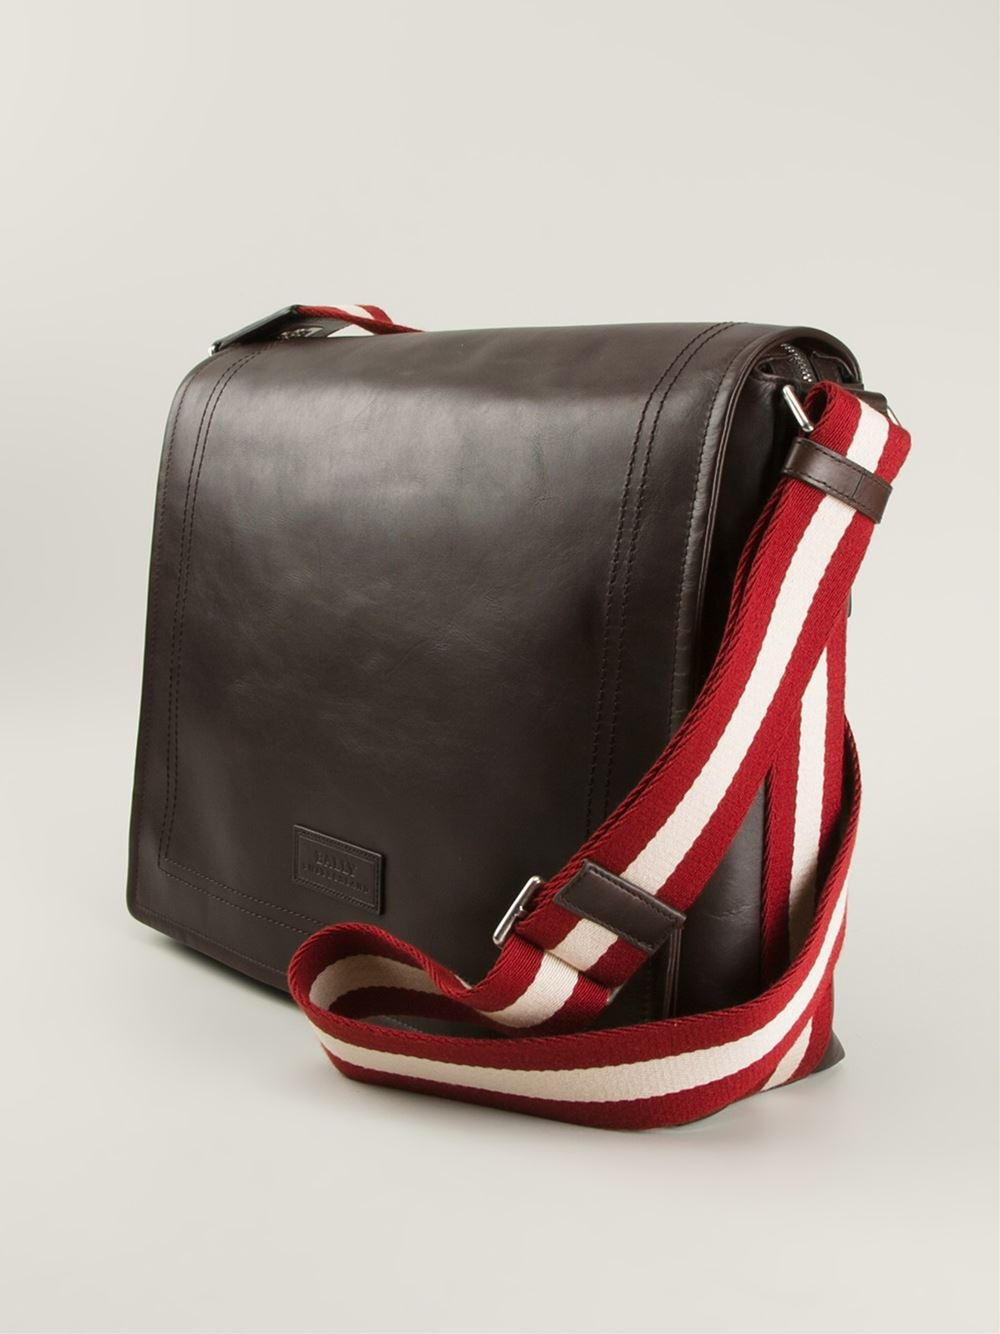 Bally Medium Triar Messenger Bag in Brown for Men - Lyst